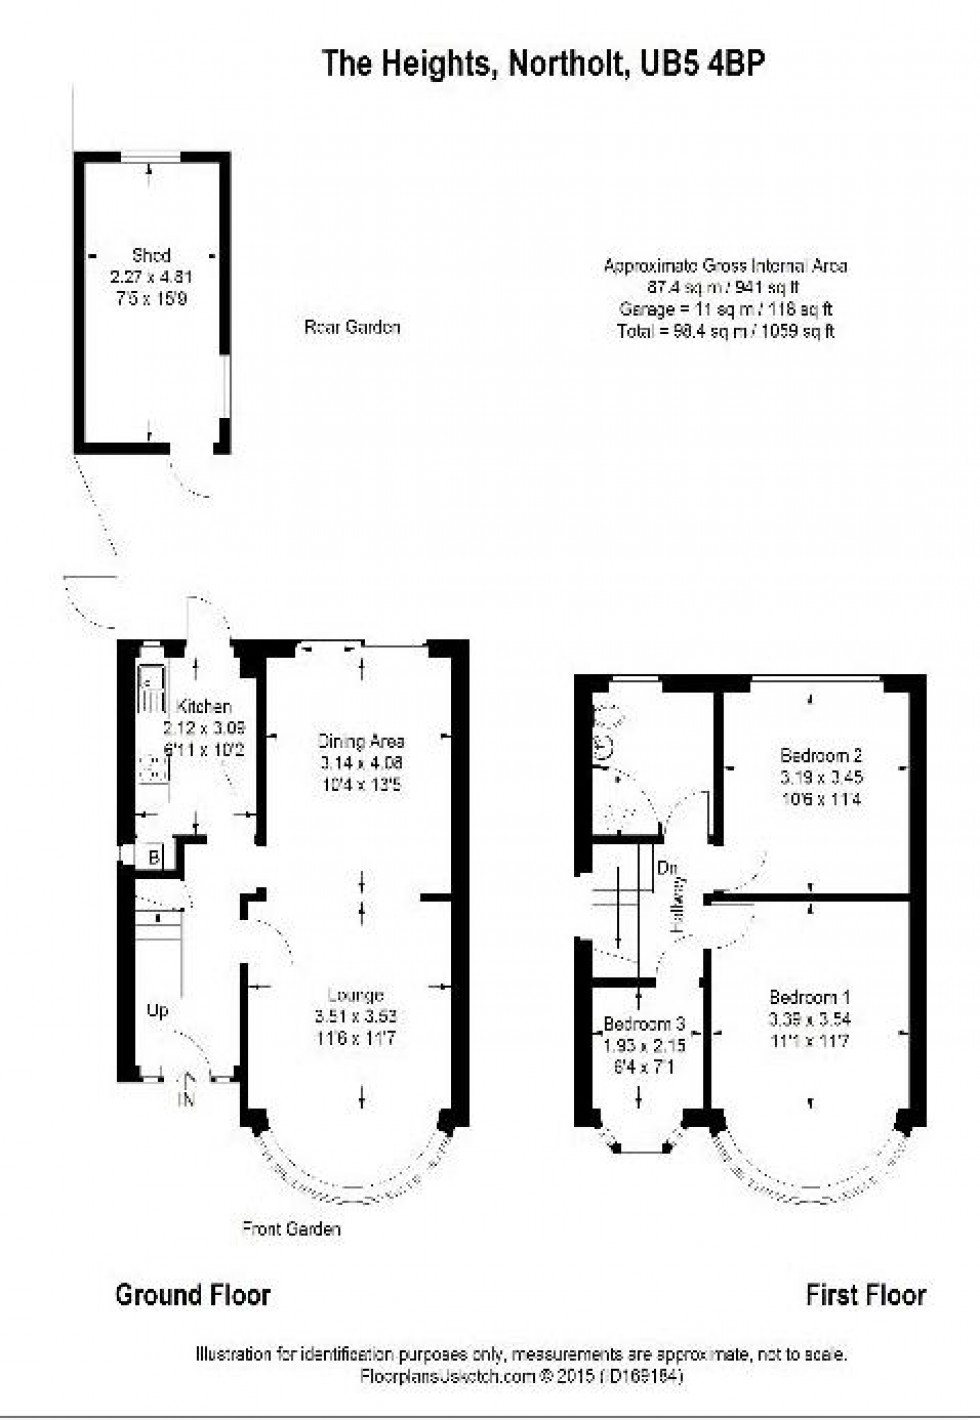 Floorplan for The Heights, Northolt, UB5 4BP